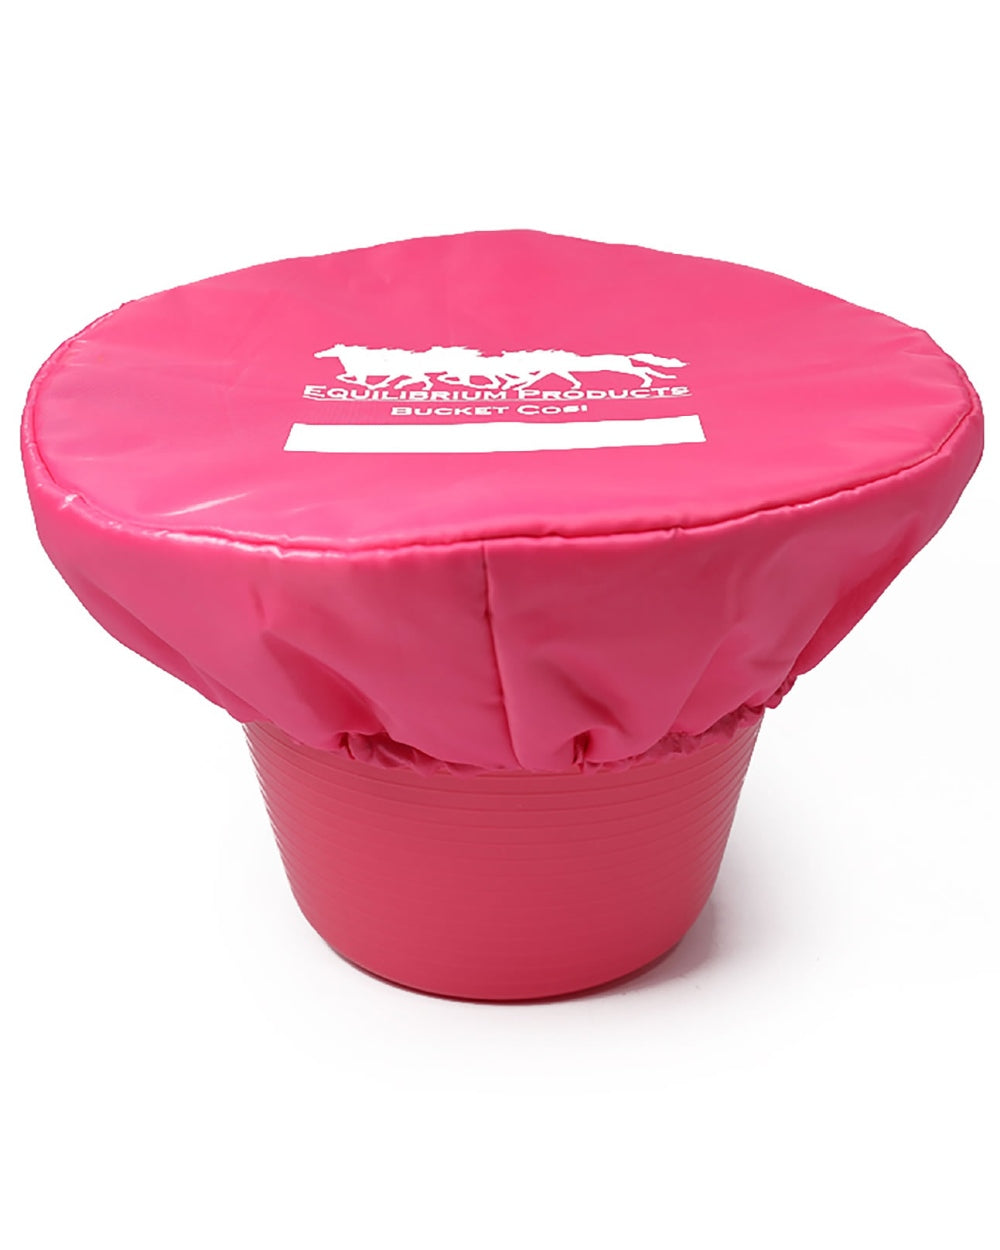 Pink coloured Equilibrium Bucket Cosi on white background 